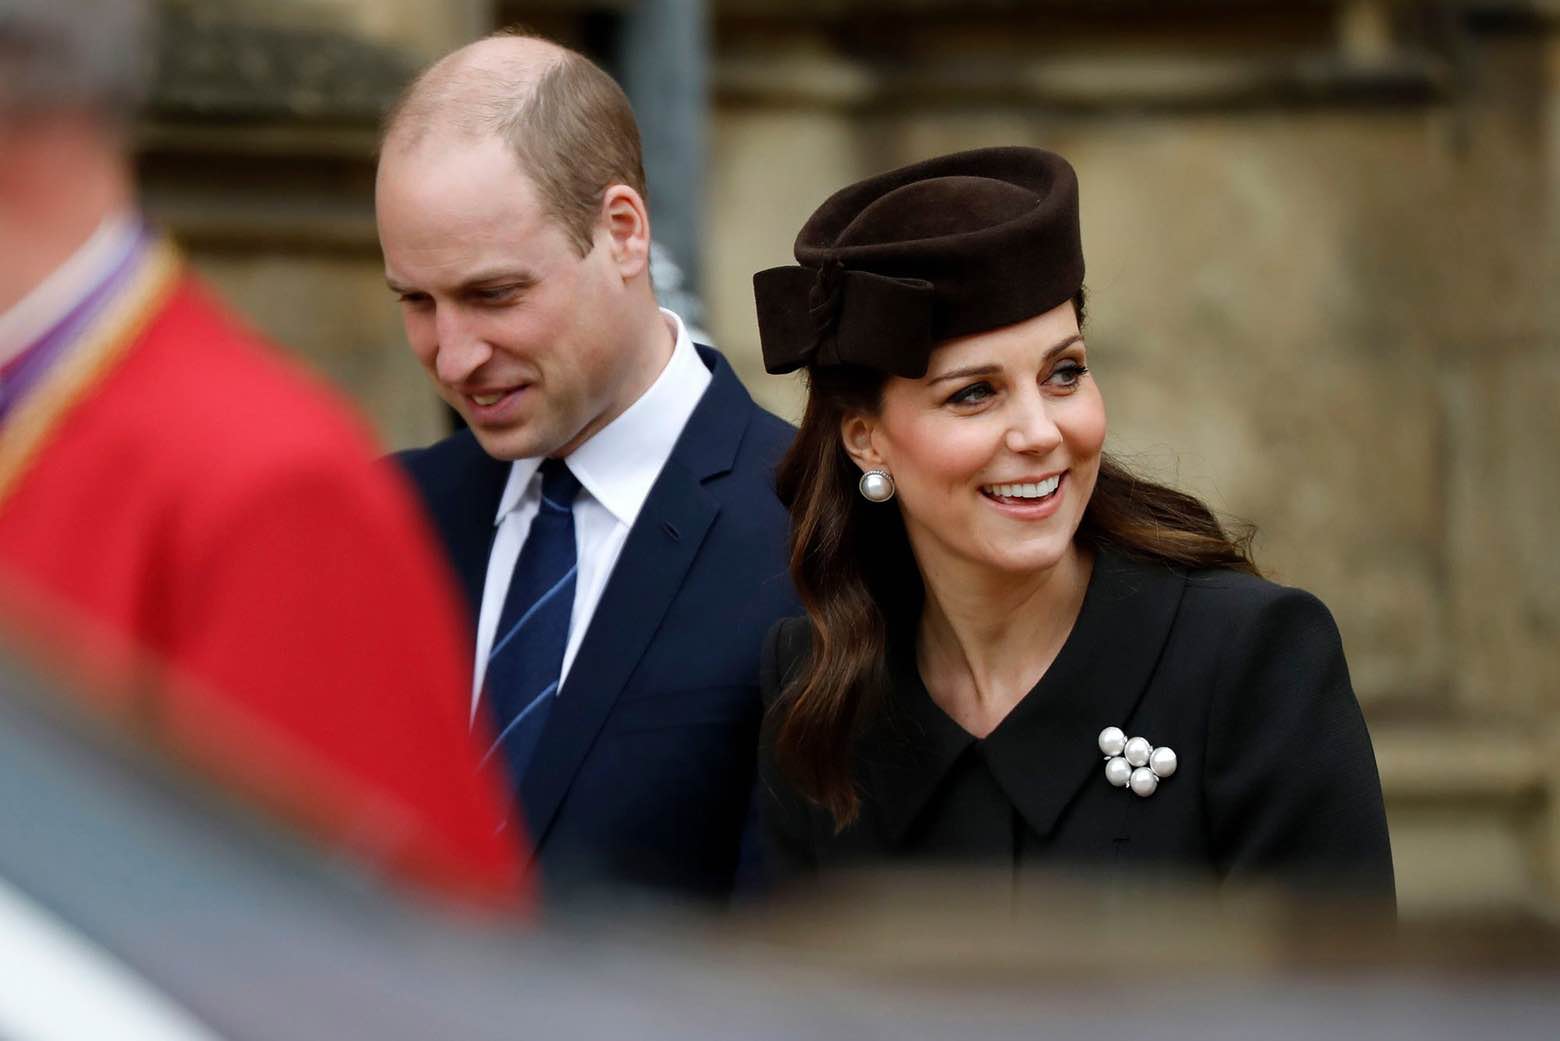 Prince William And Kate Broke Royal Protocol, Report